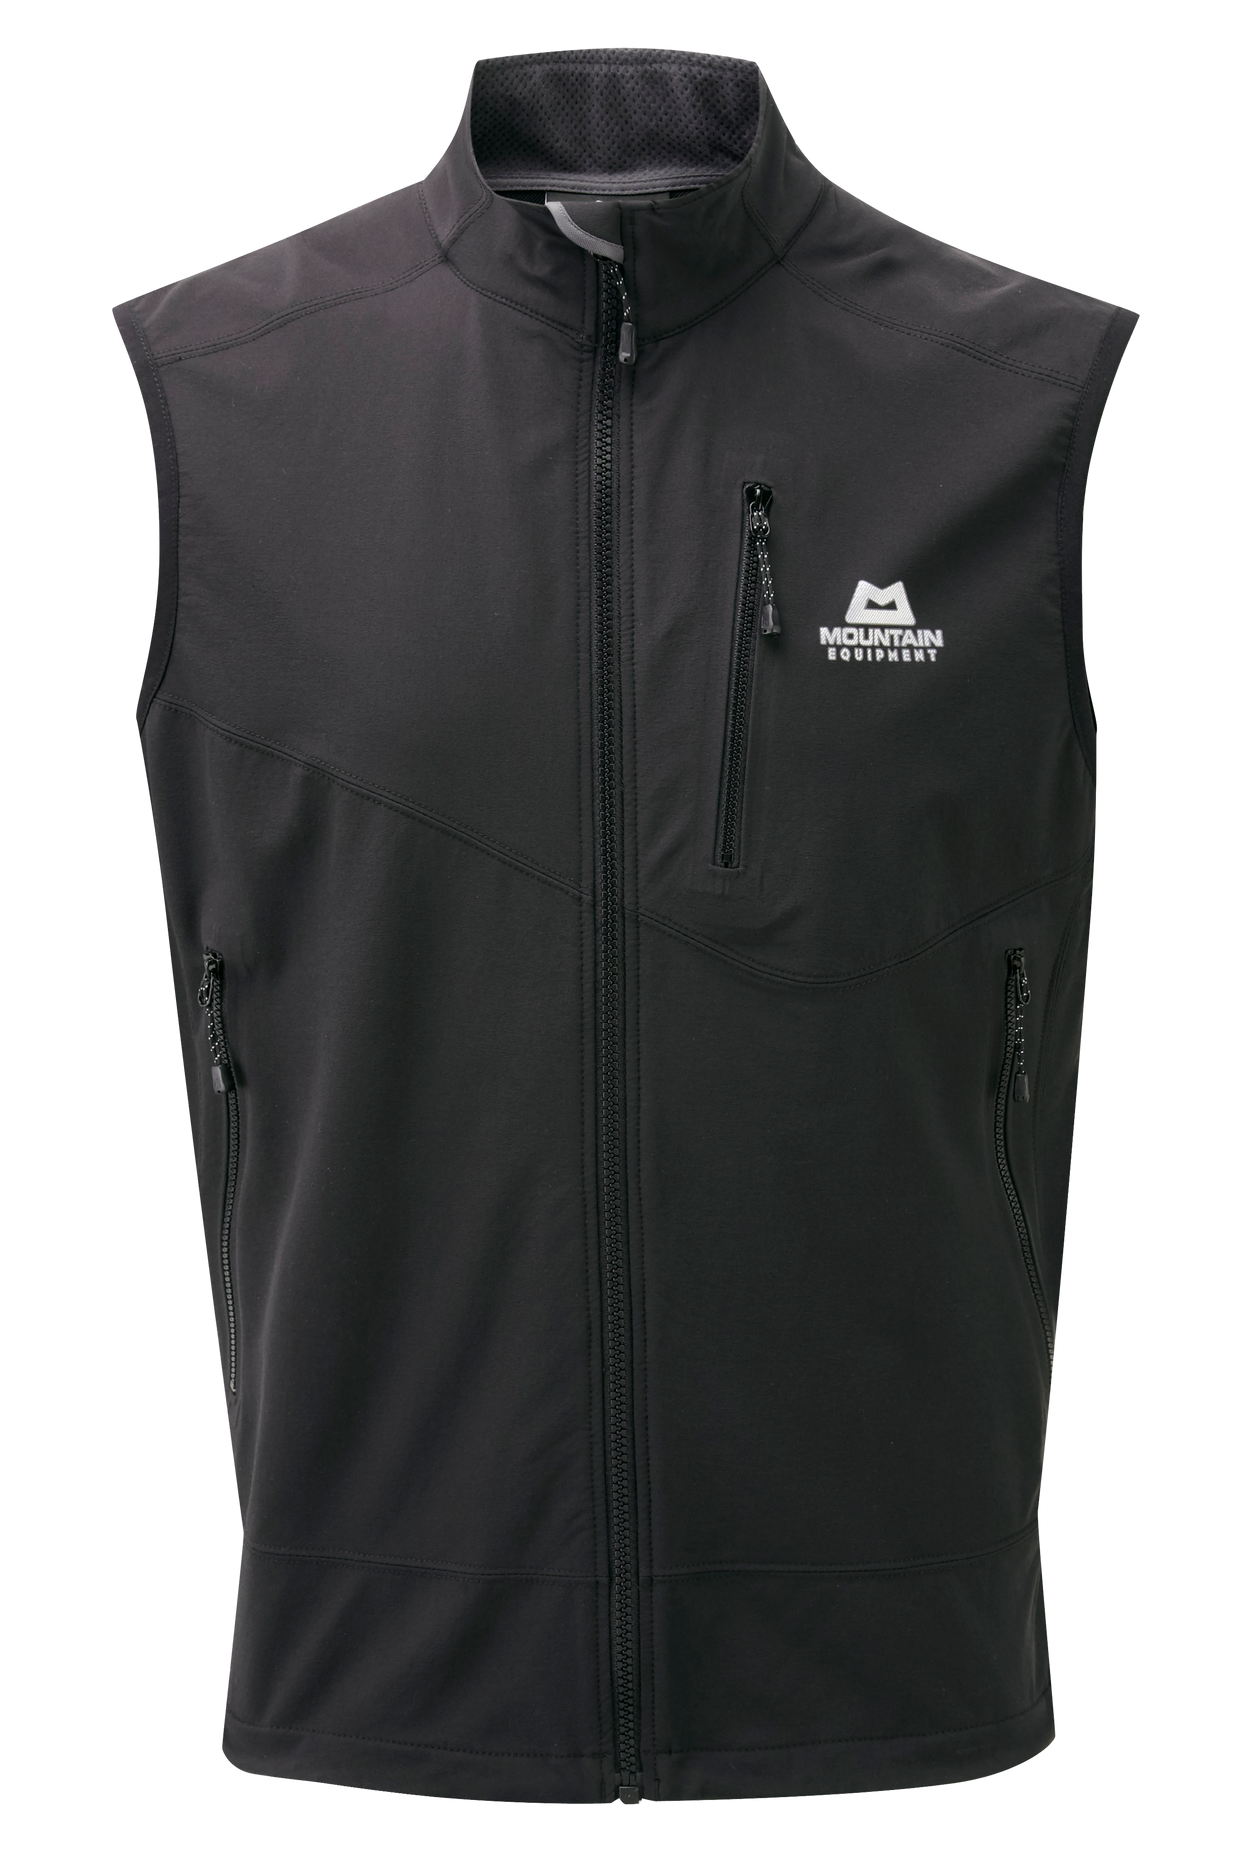 Mountain Equipment pánská softshellová vesta Frontier Vest Barva: black, Velikost: L